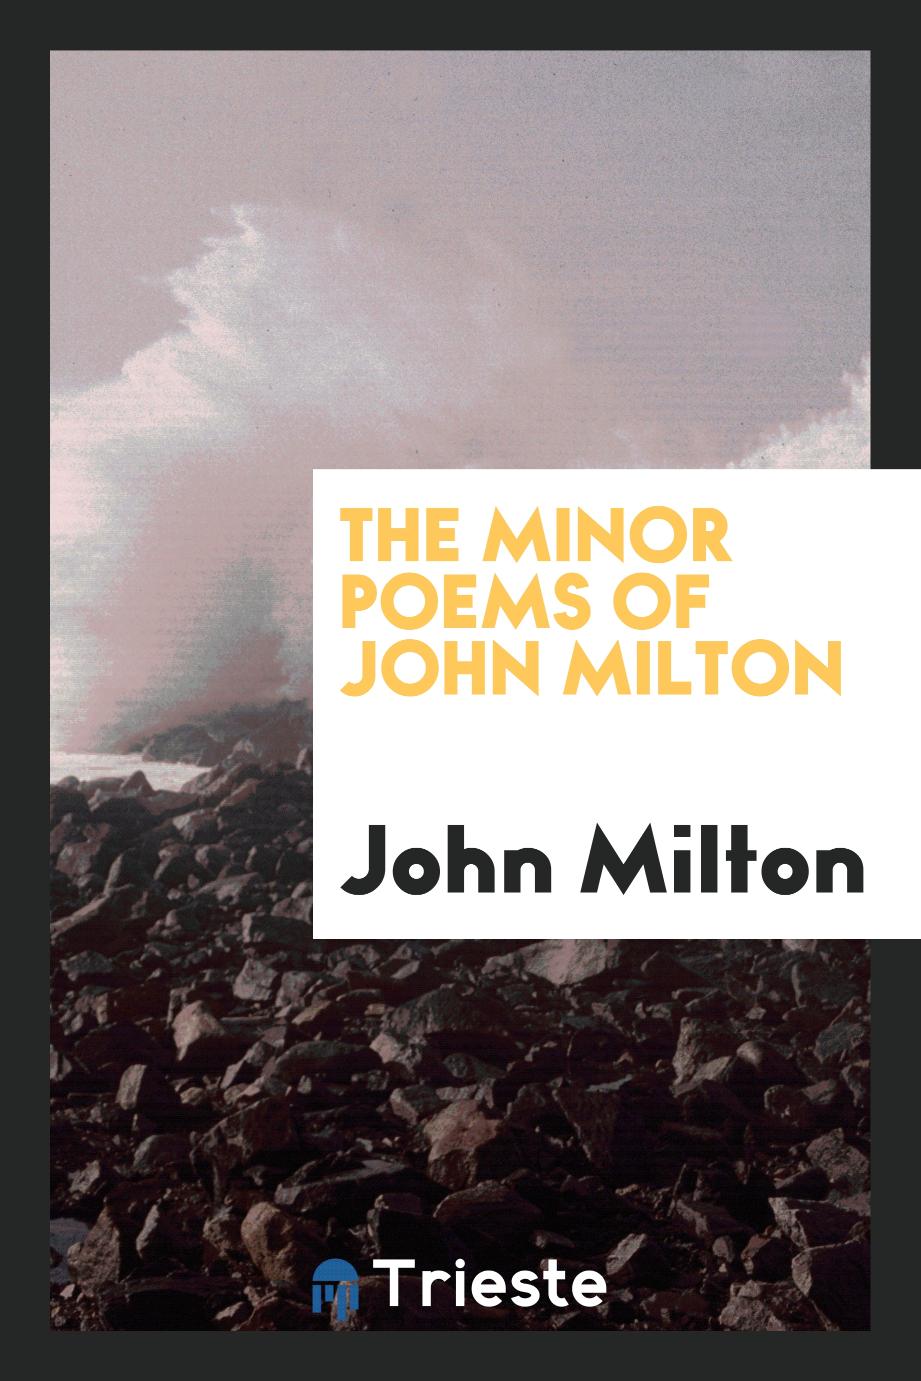 The minor poems of John Milton